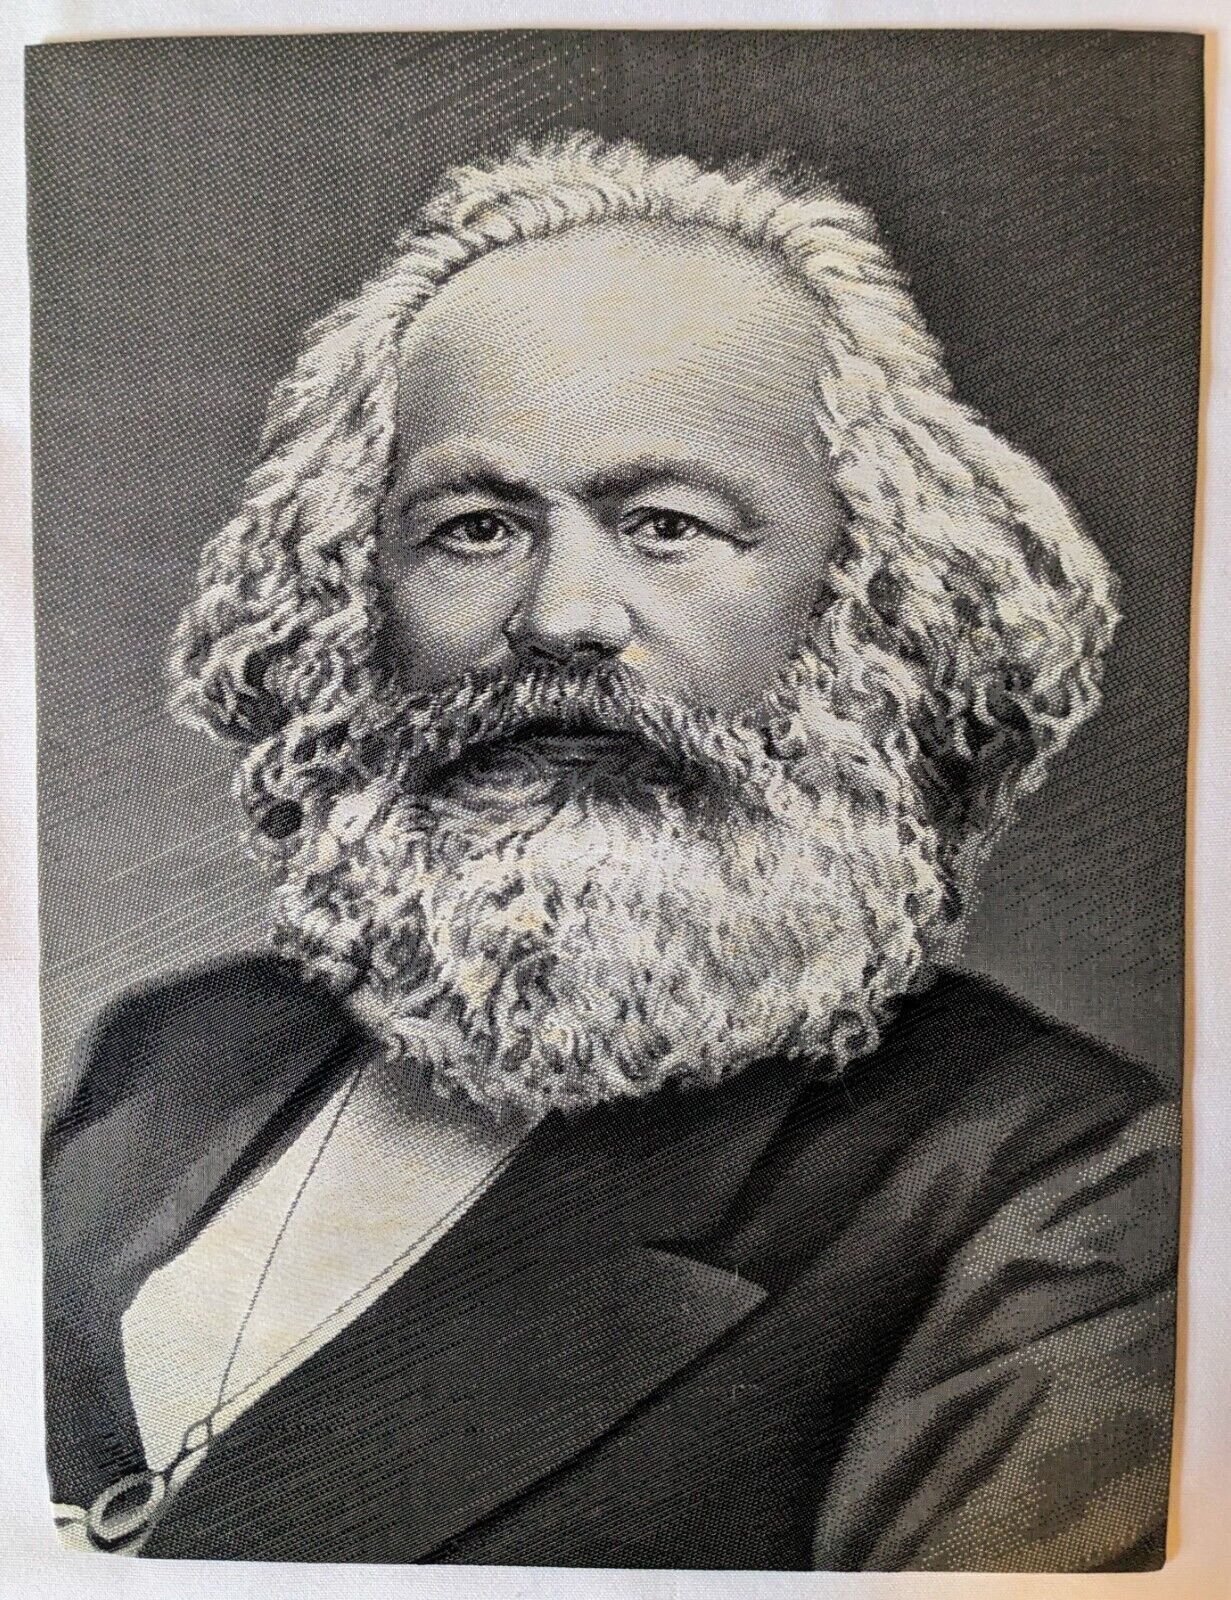 Silk Woven Portrait of Philosopher and Socialist Revolutionary KARL MARX Vintage